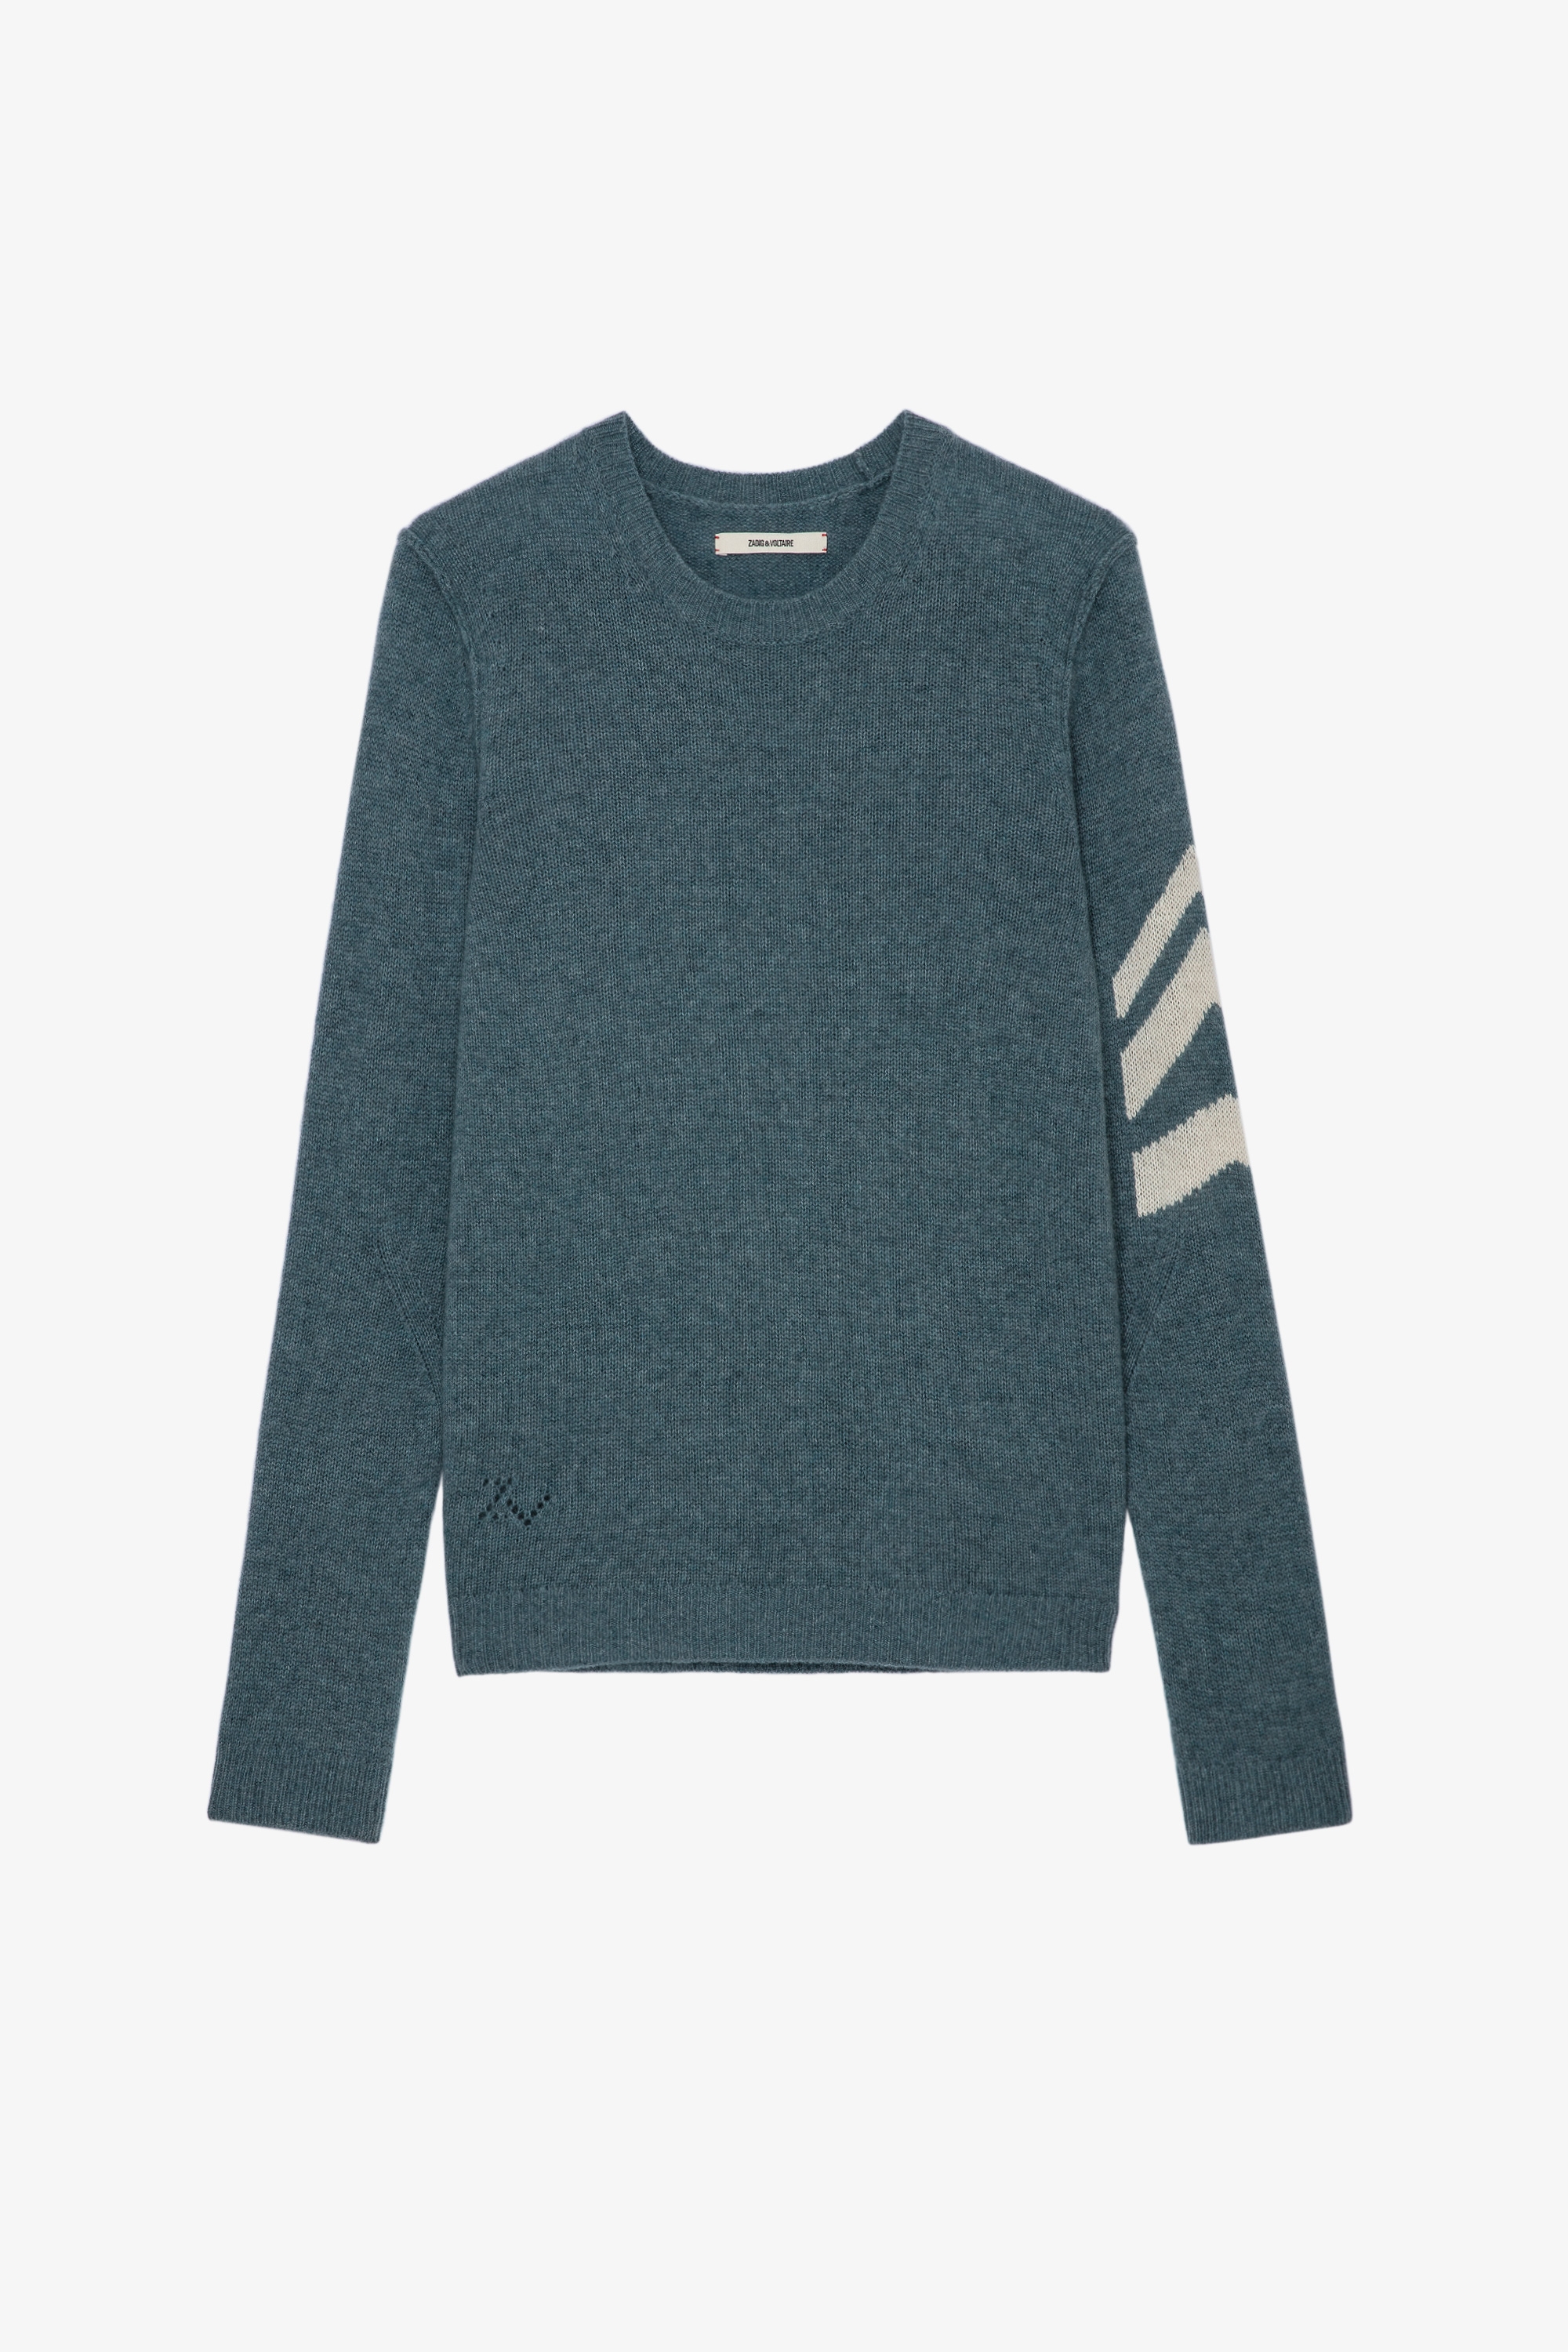 Kennedy Arrow Sweater